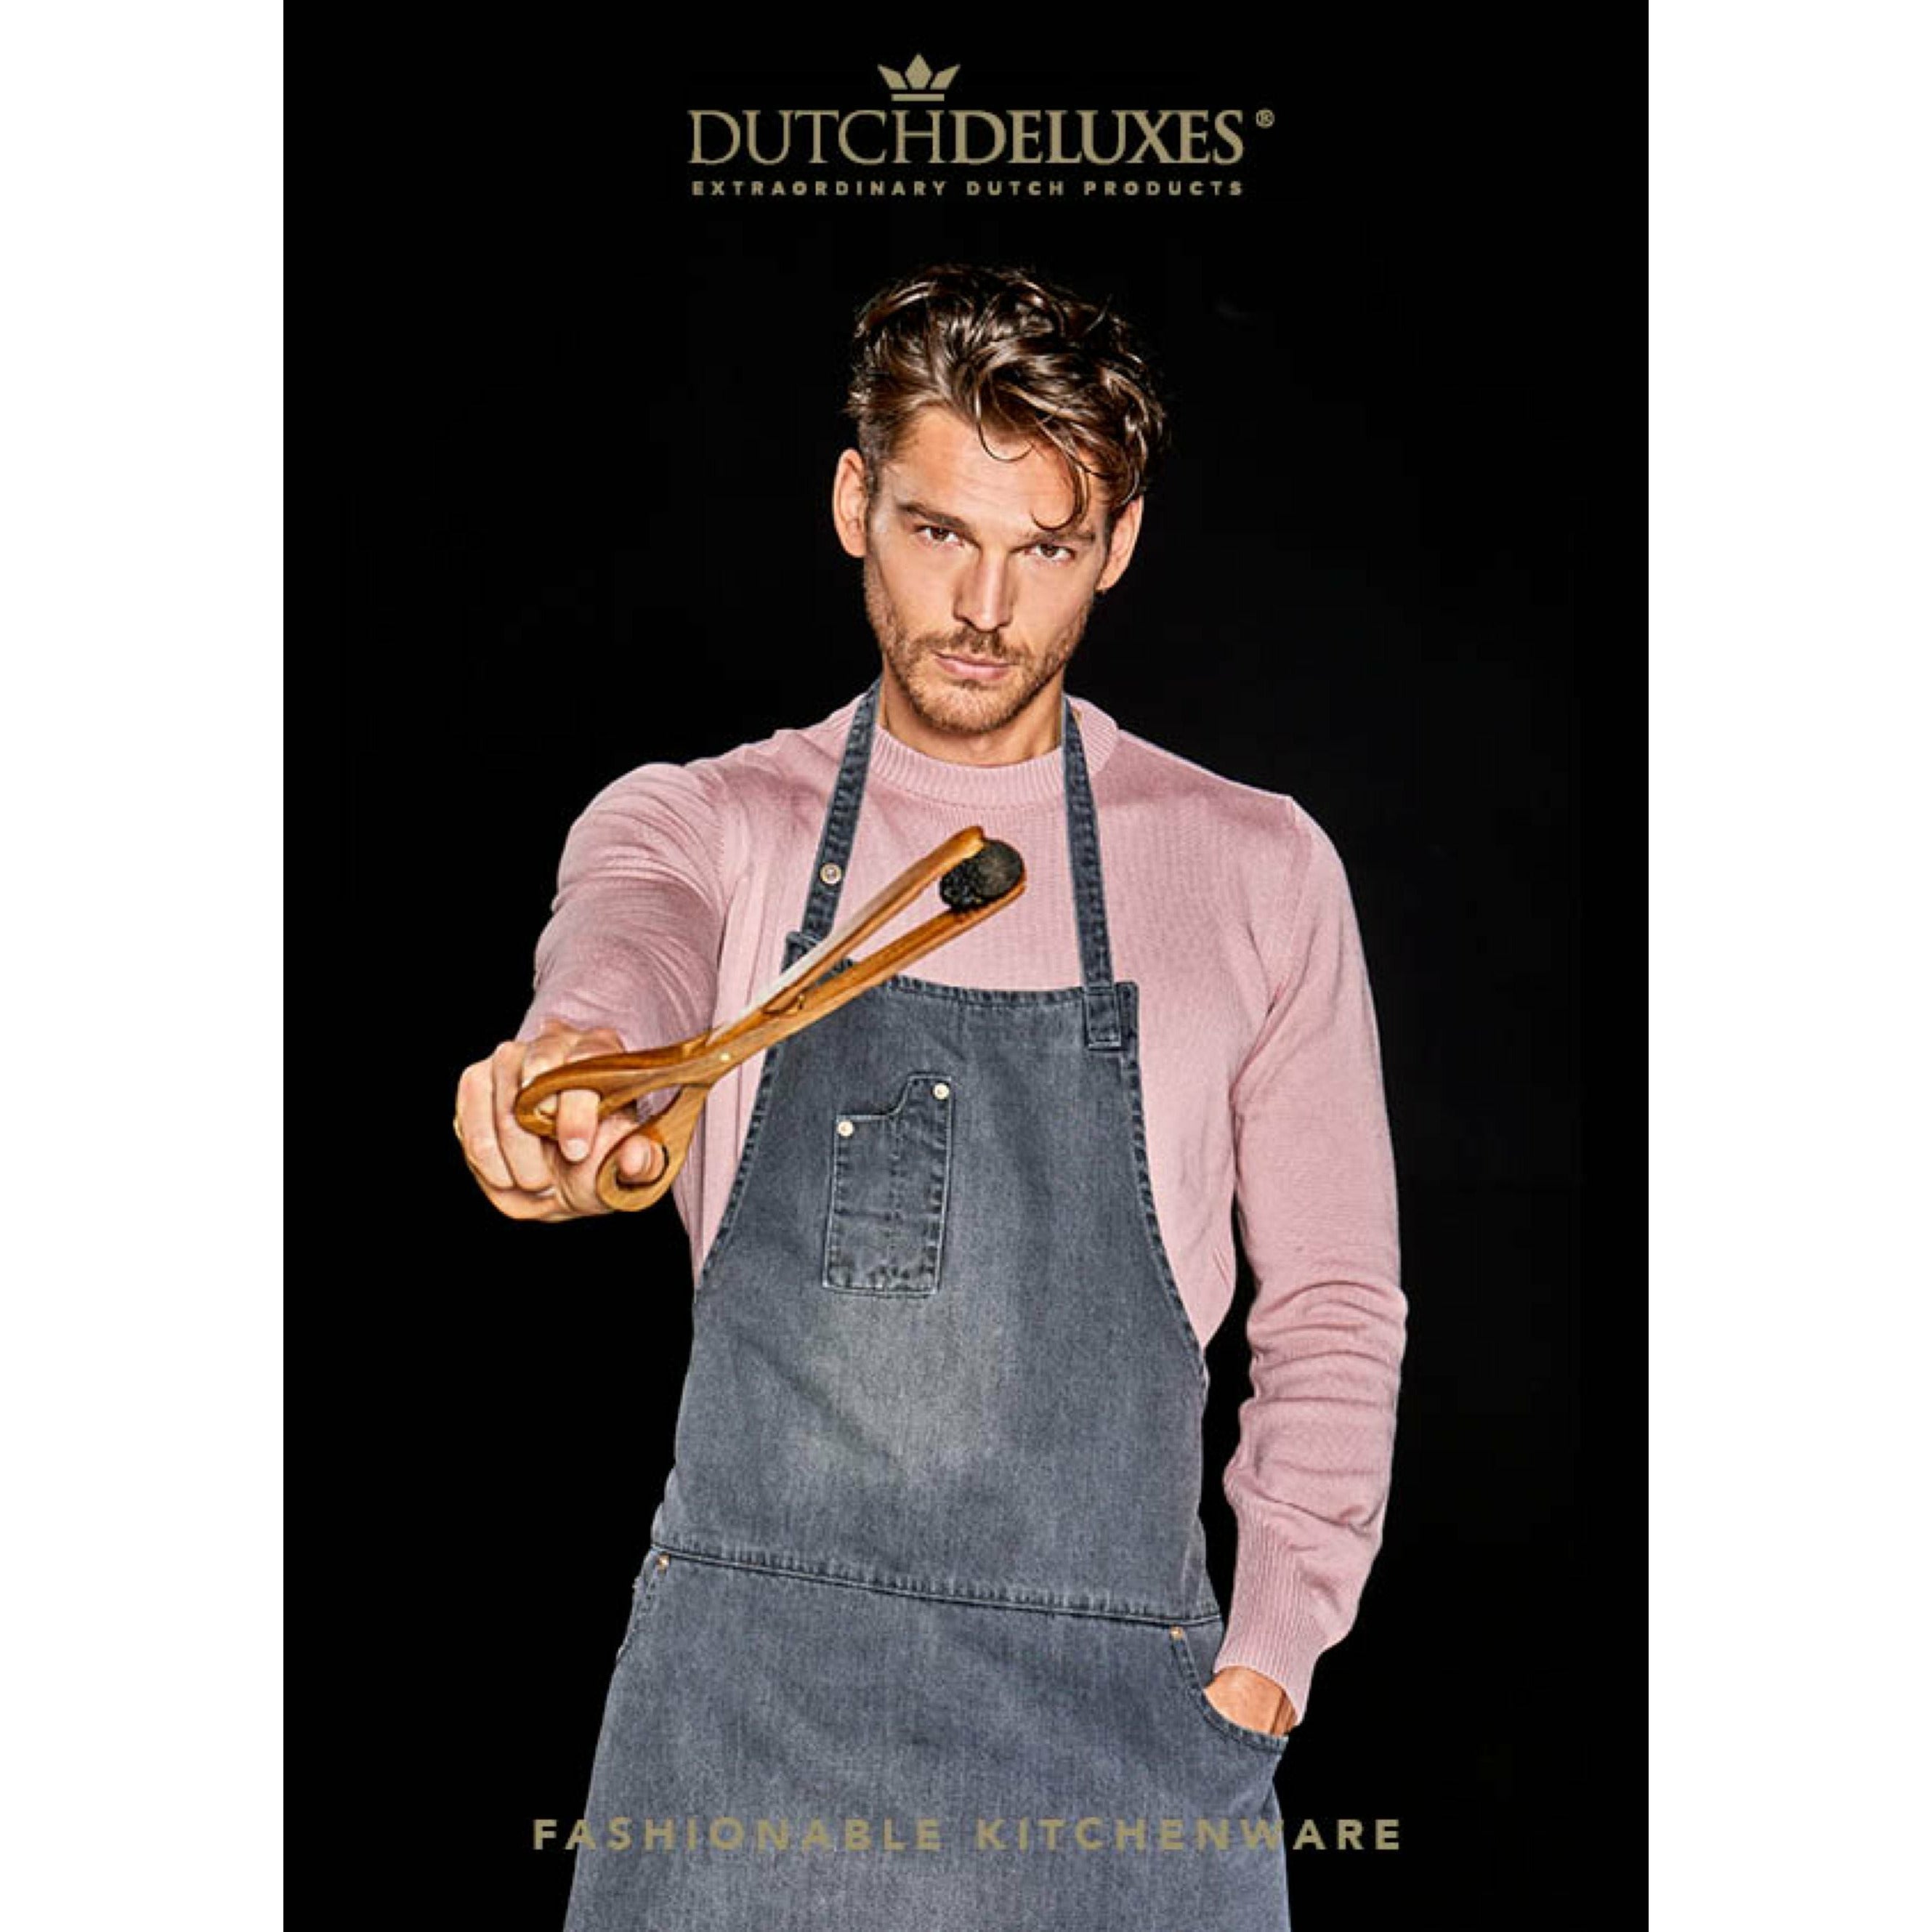 Dutchdeluxs Five Pocket Apron Comfort Fit, lavato grigio